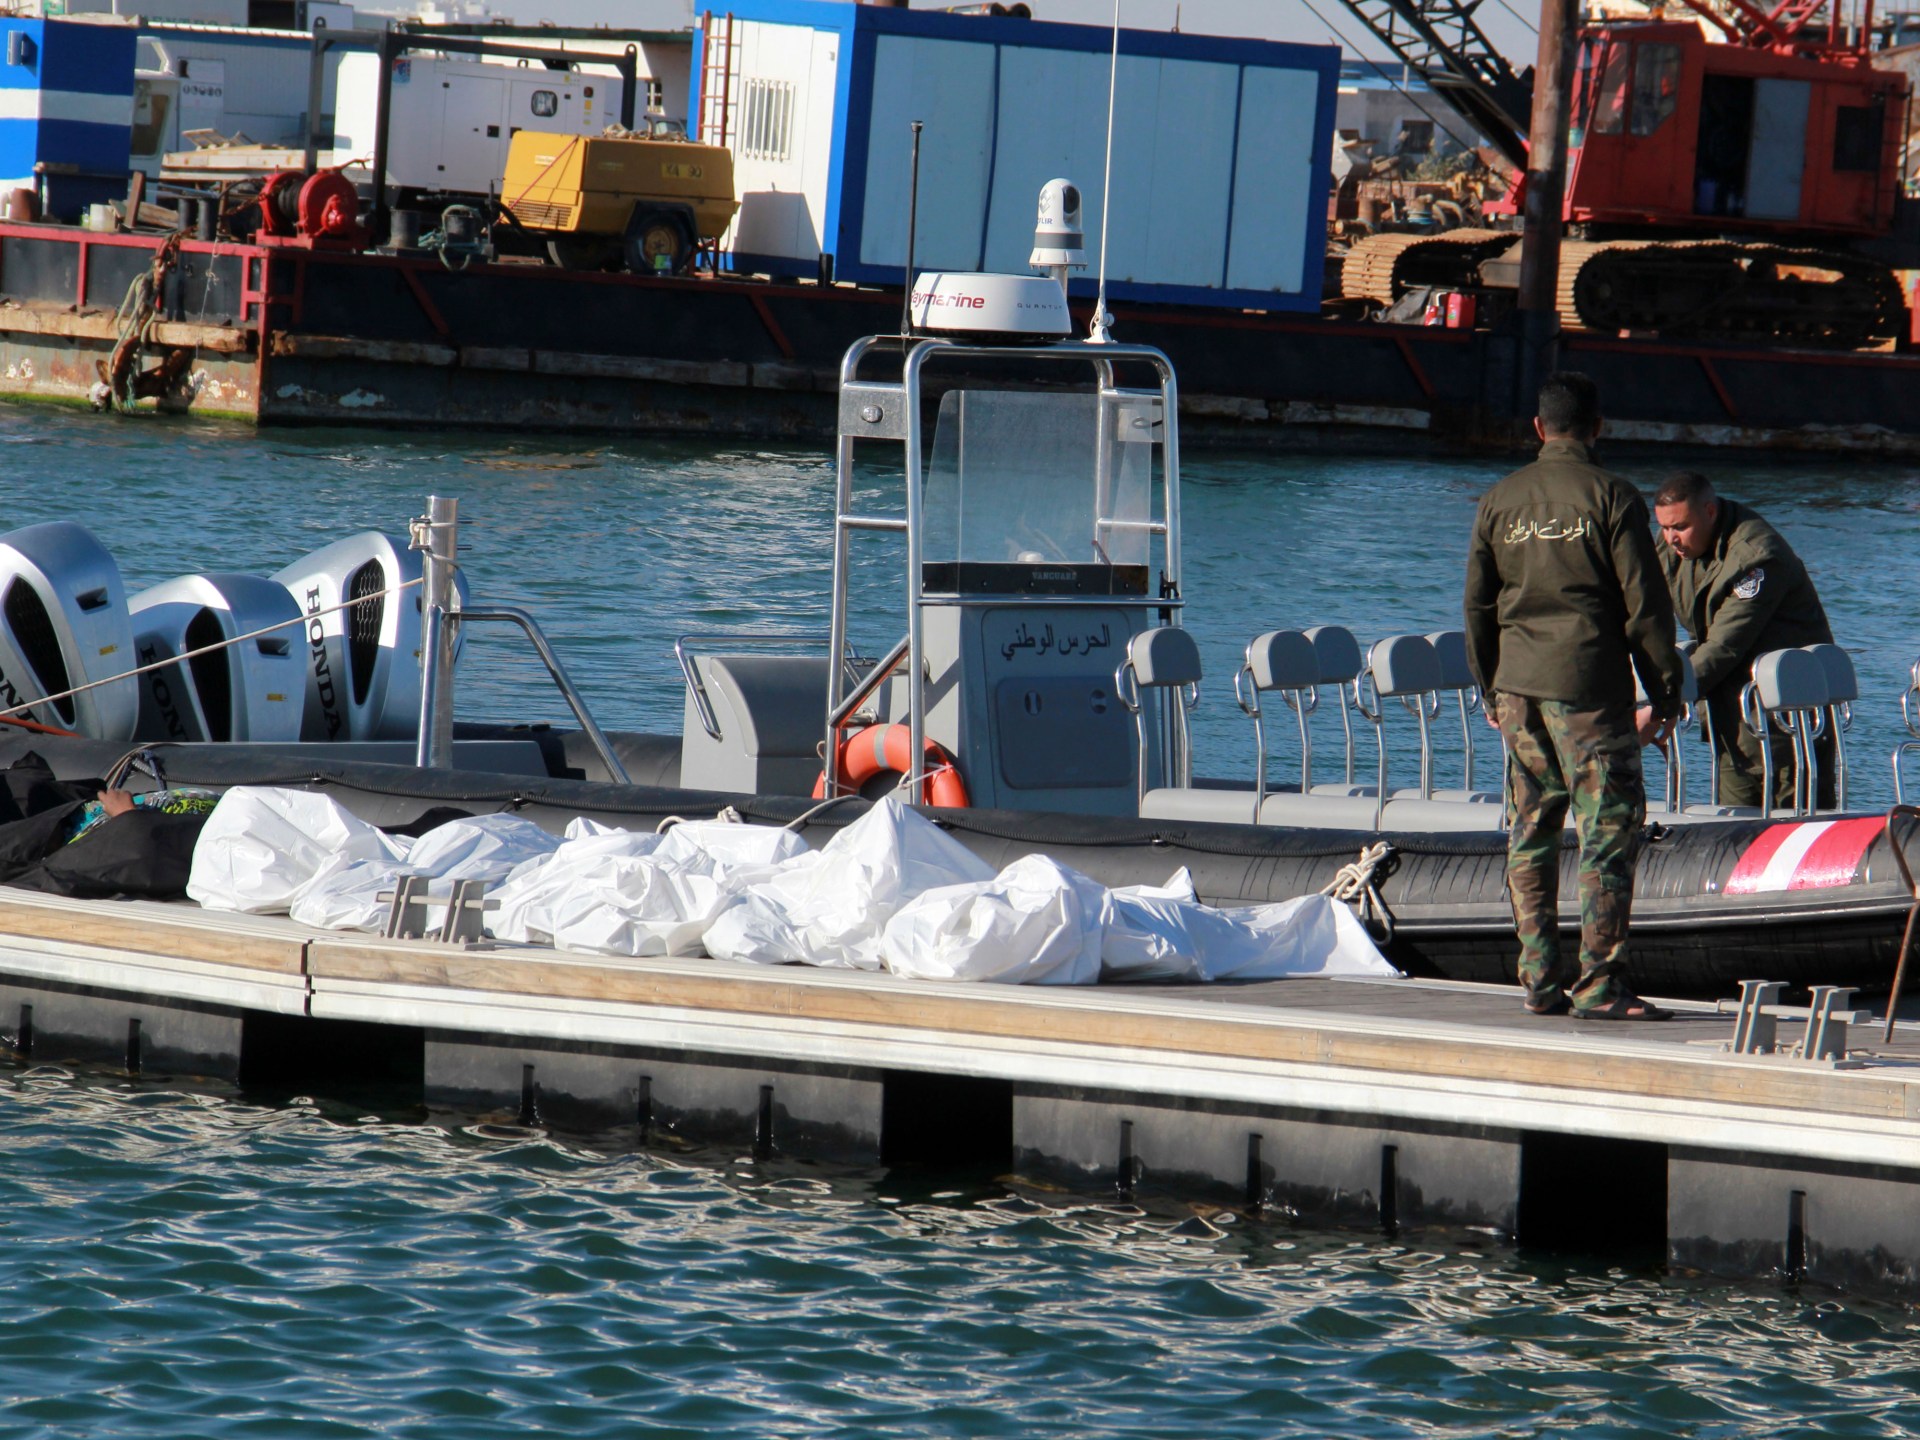 Lebih banyak kapal tenggelam di lepas pantai Tunisia, menewaskan 29 pencari suaka |  Berita Pengungsi